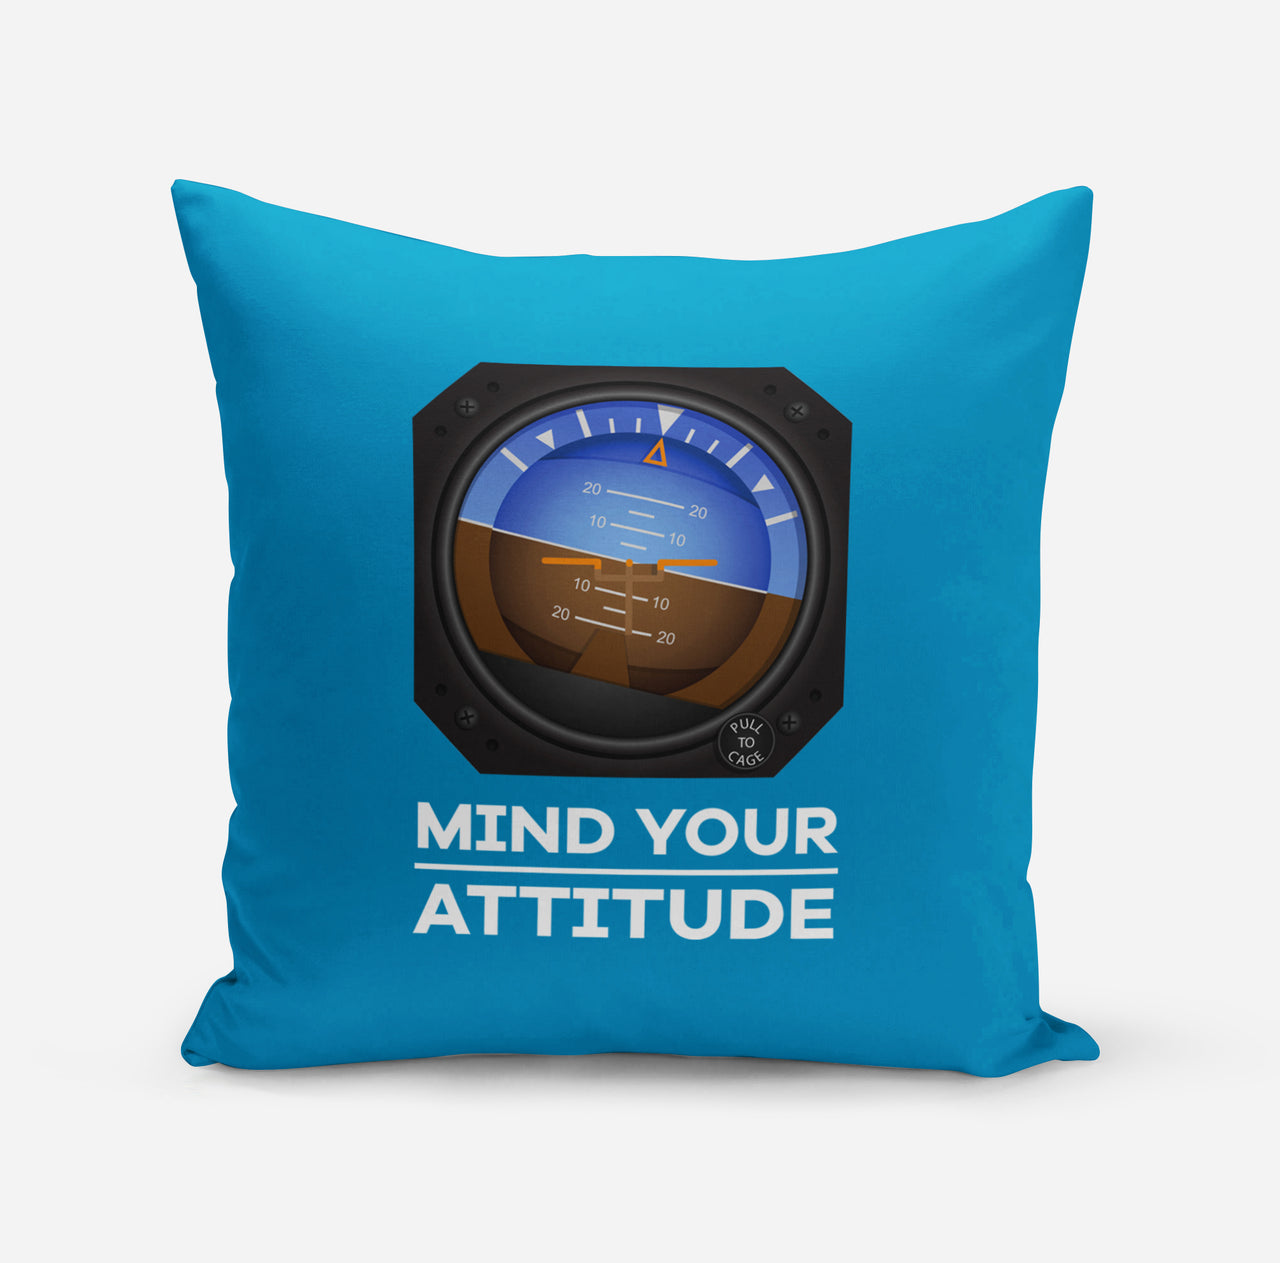 Mind Your Attitude Designed Pillows